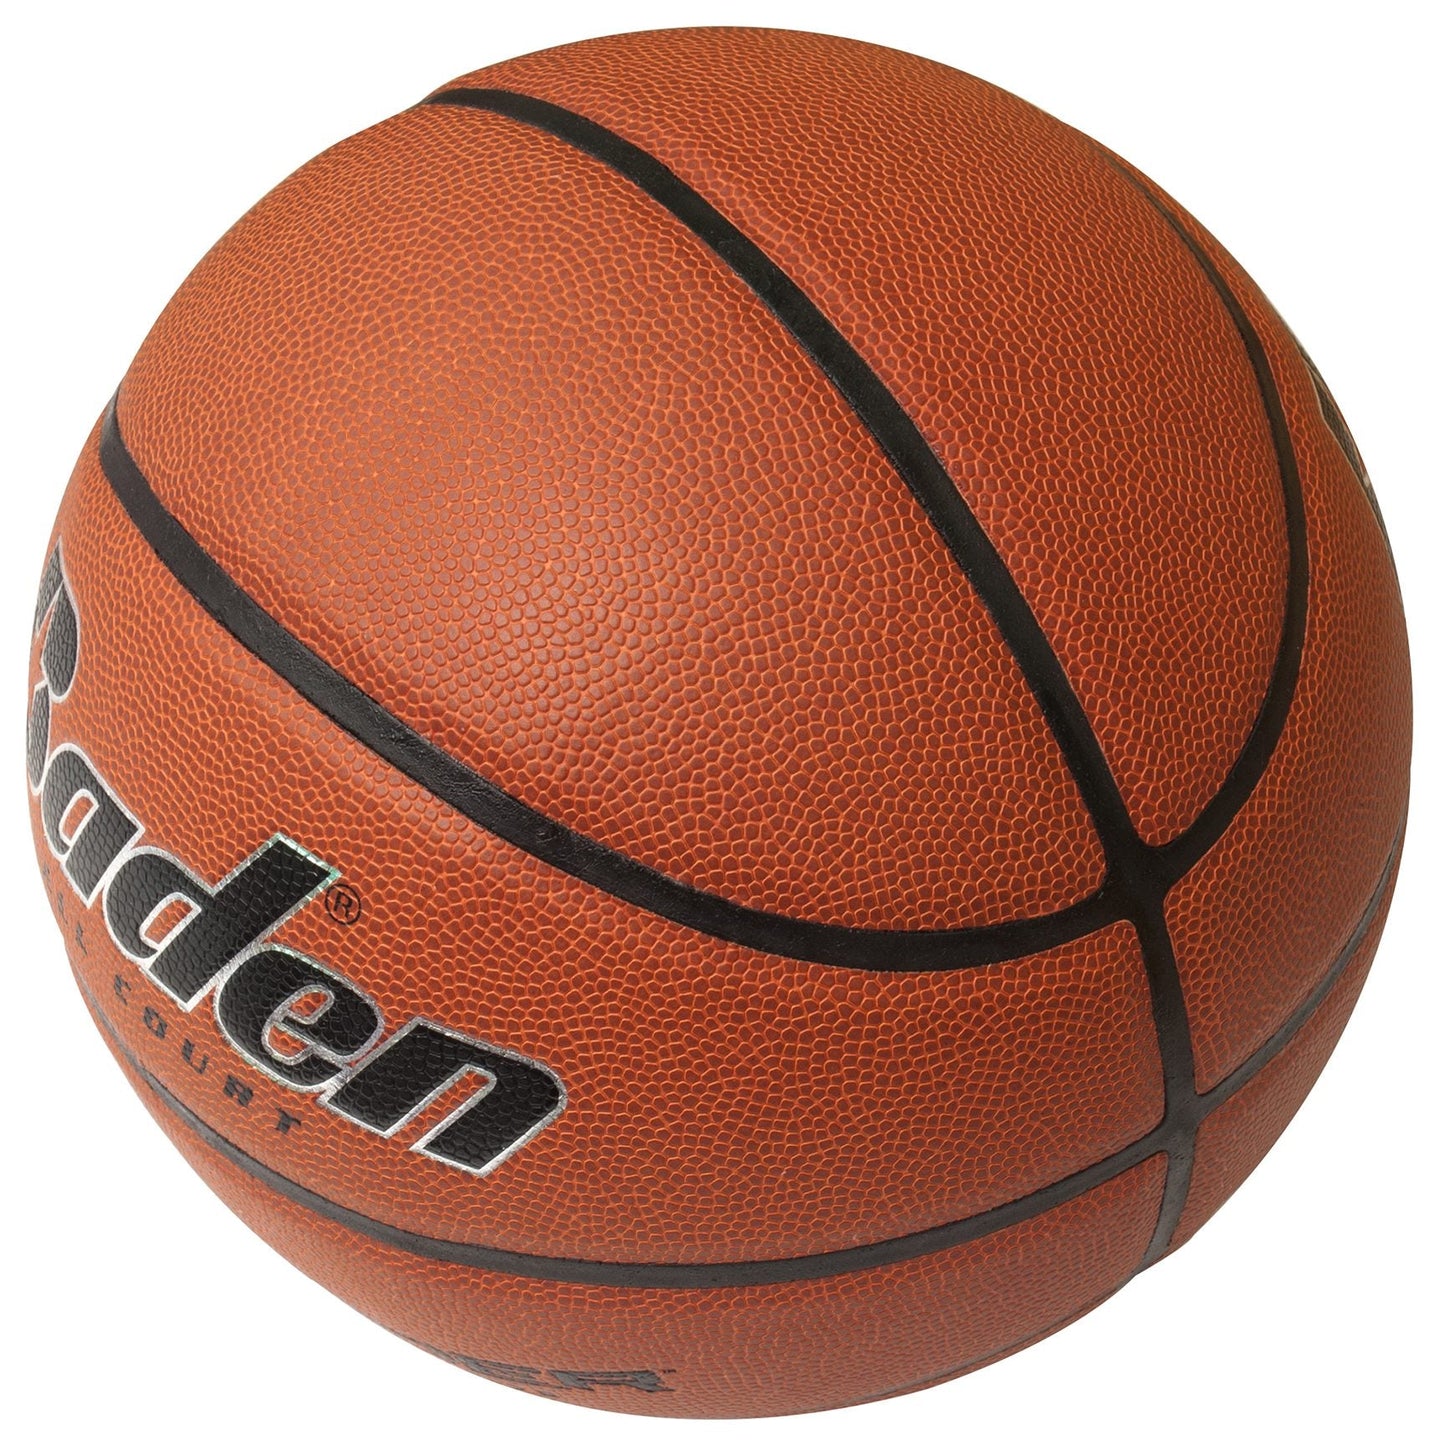 Baden B321 Contender Basketball